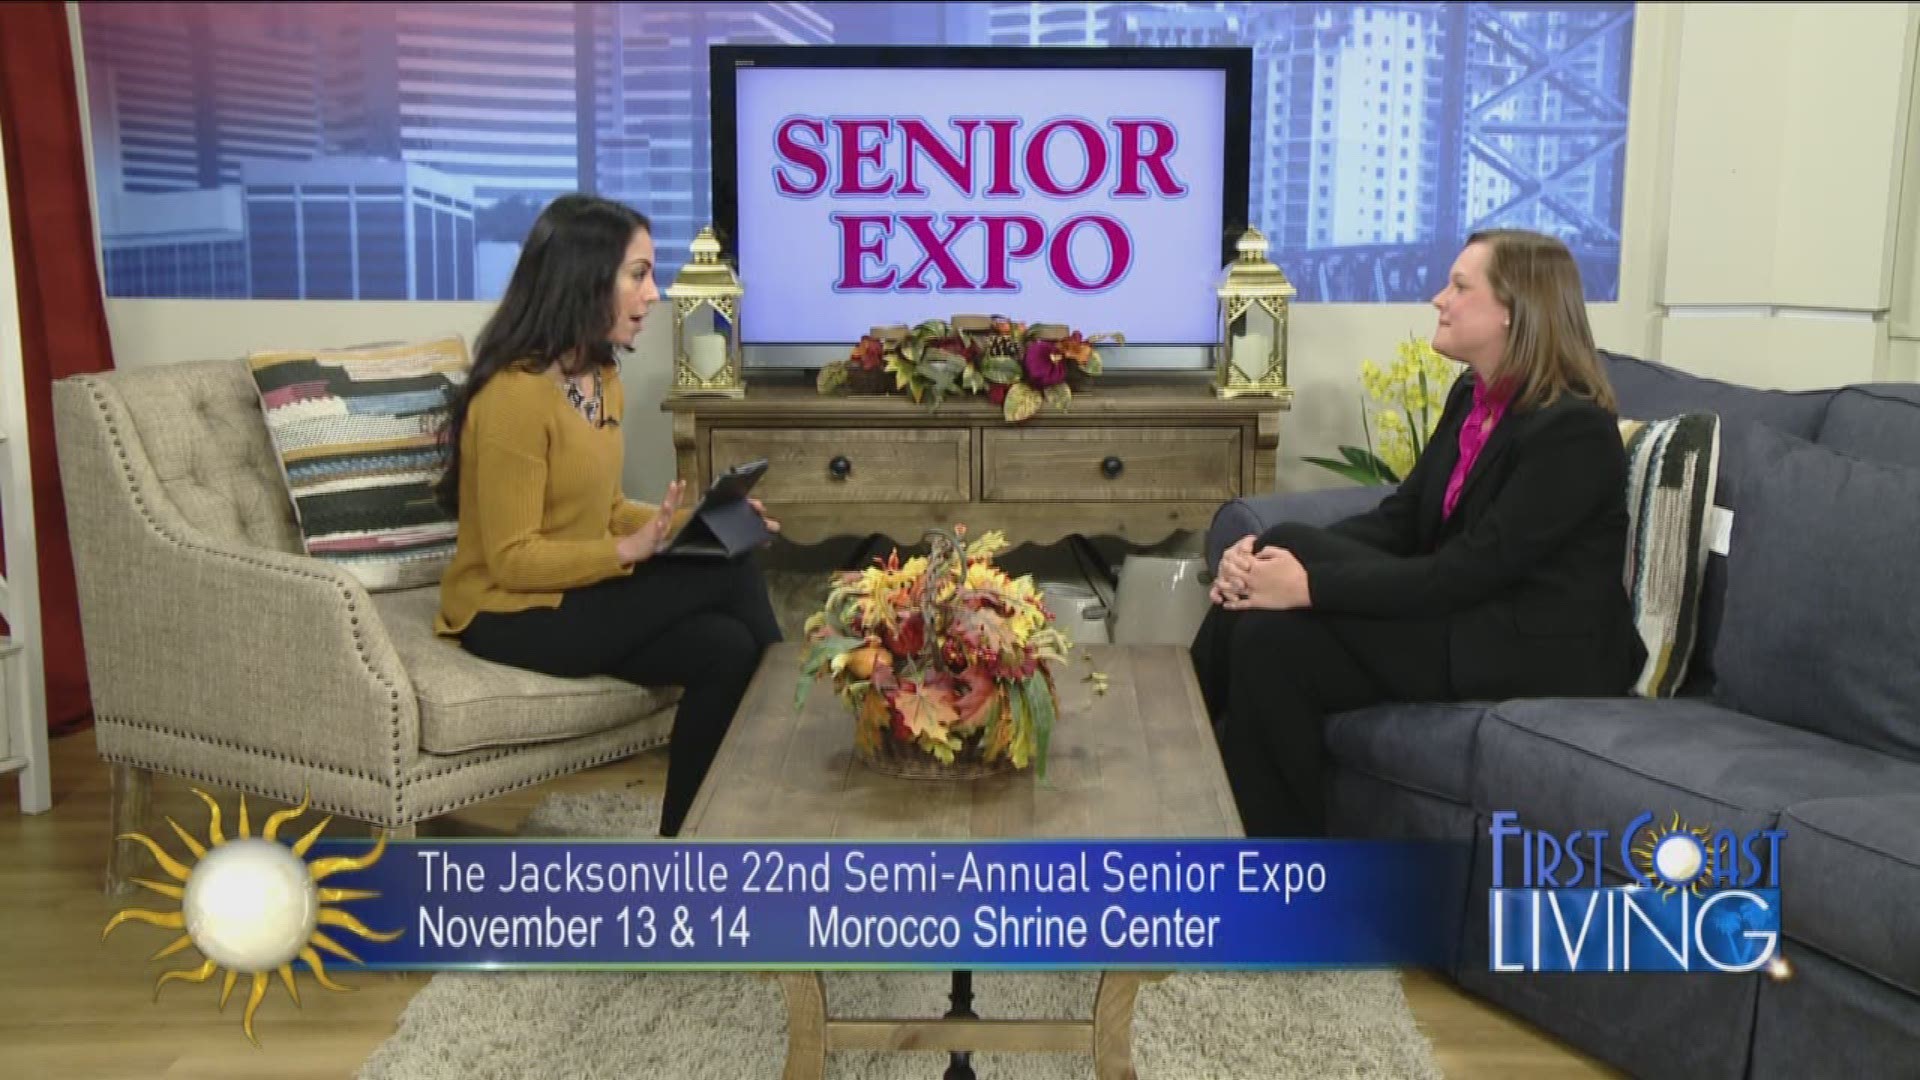 The Jacksonville 22nd Semi-Annual Senior Expo